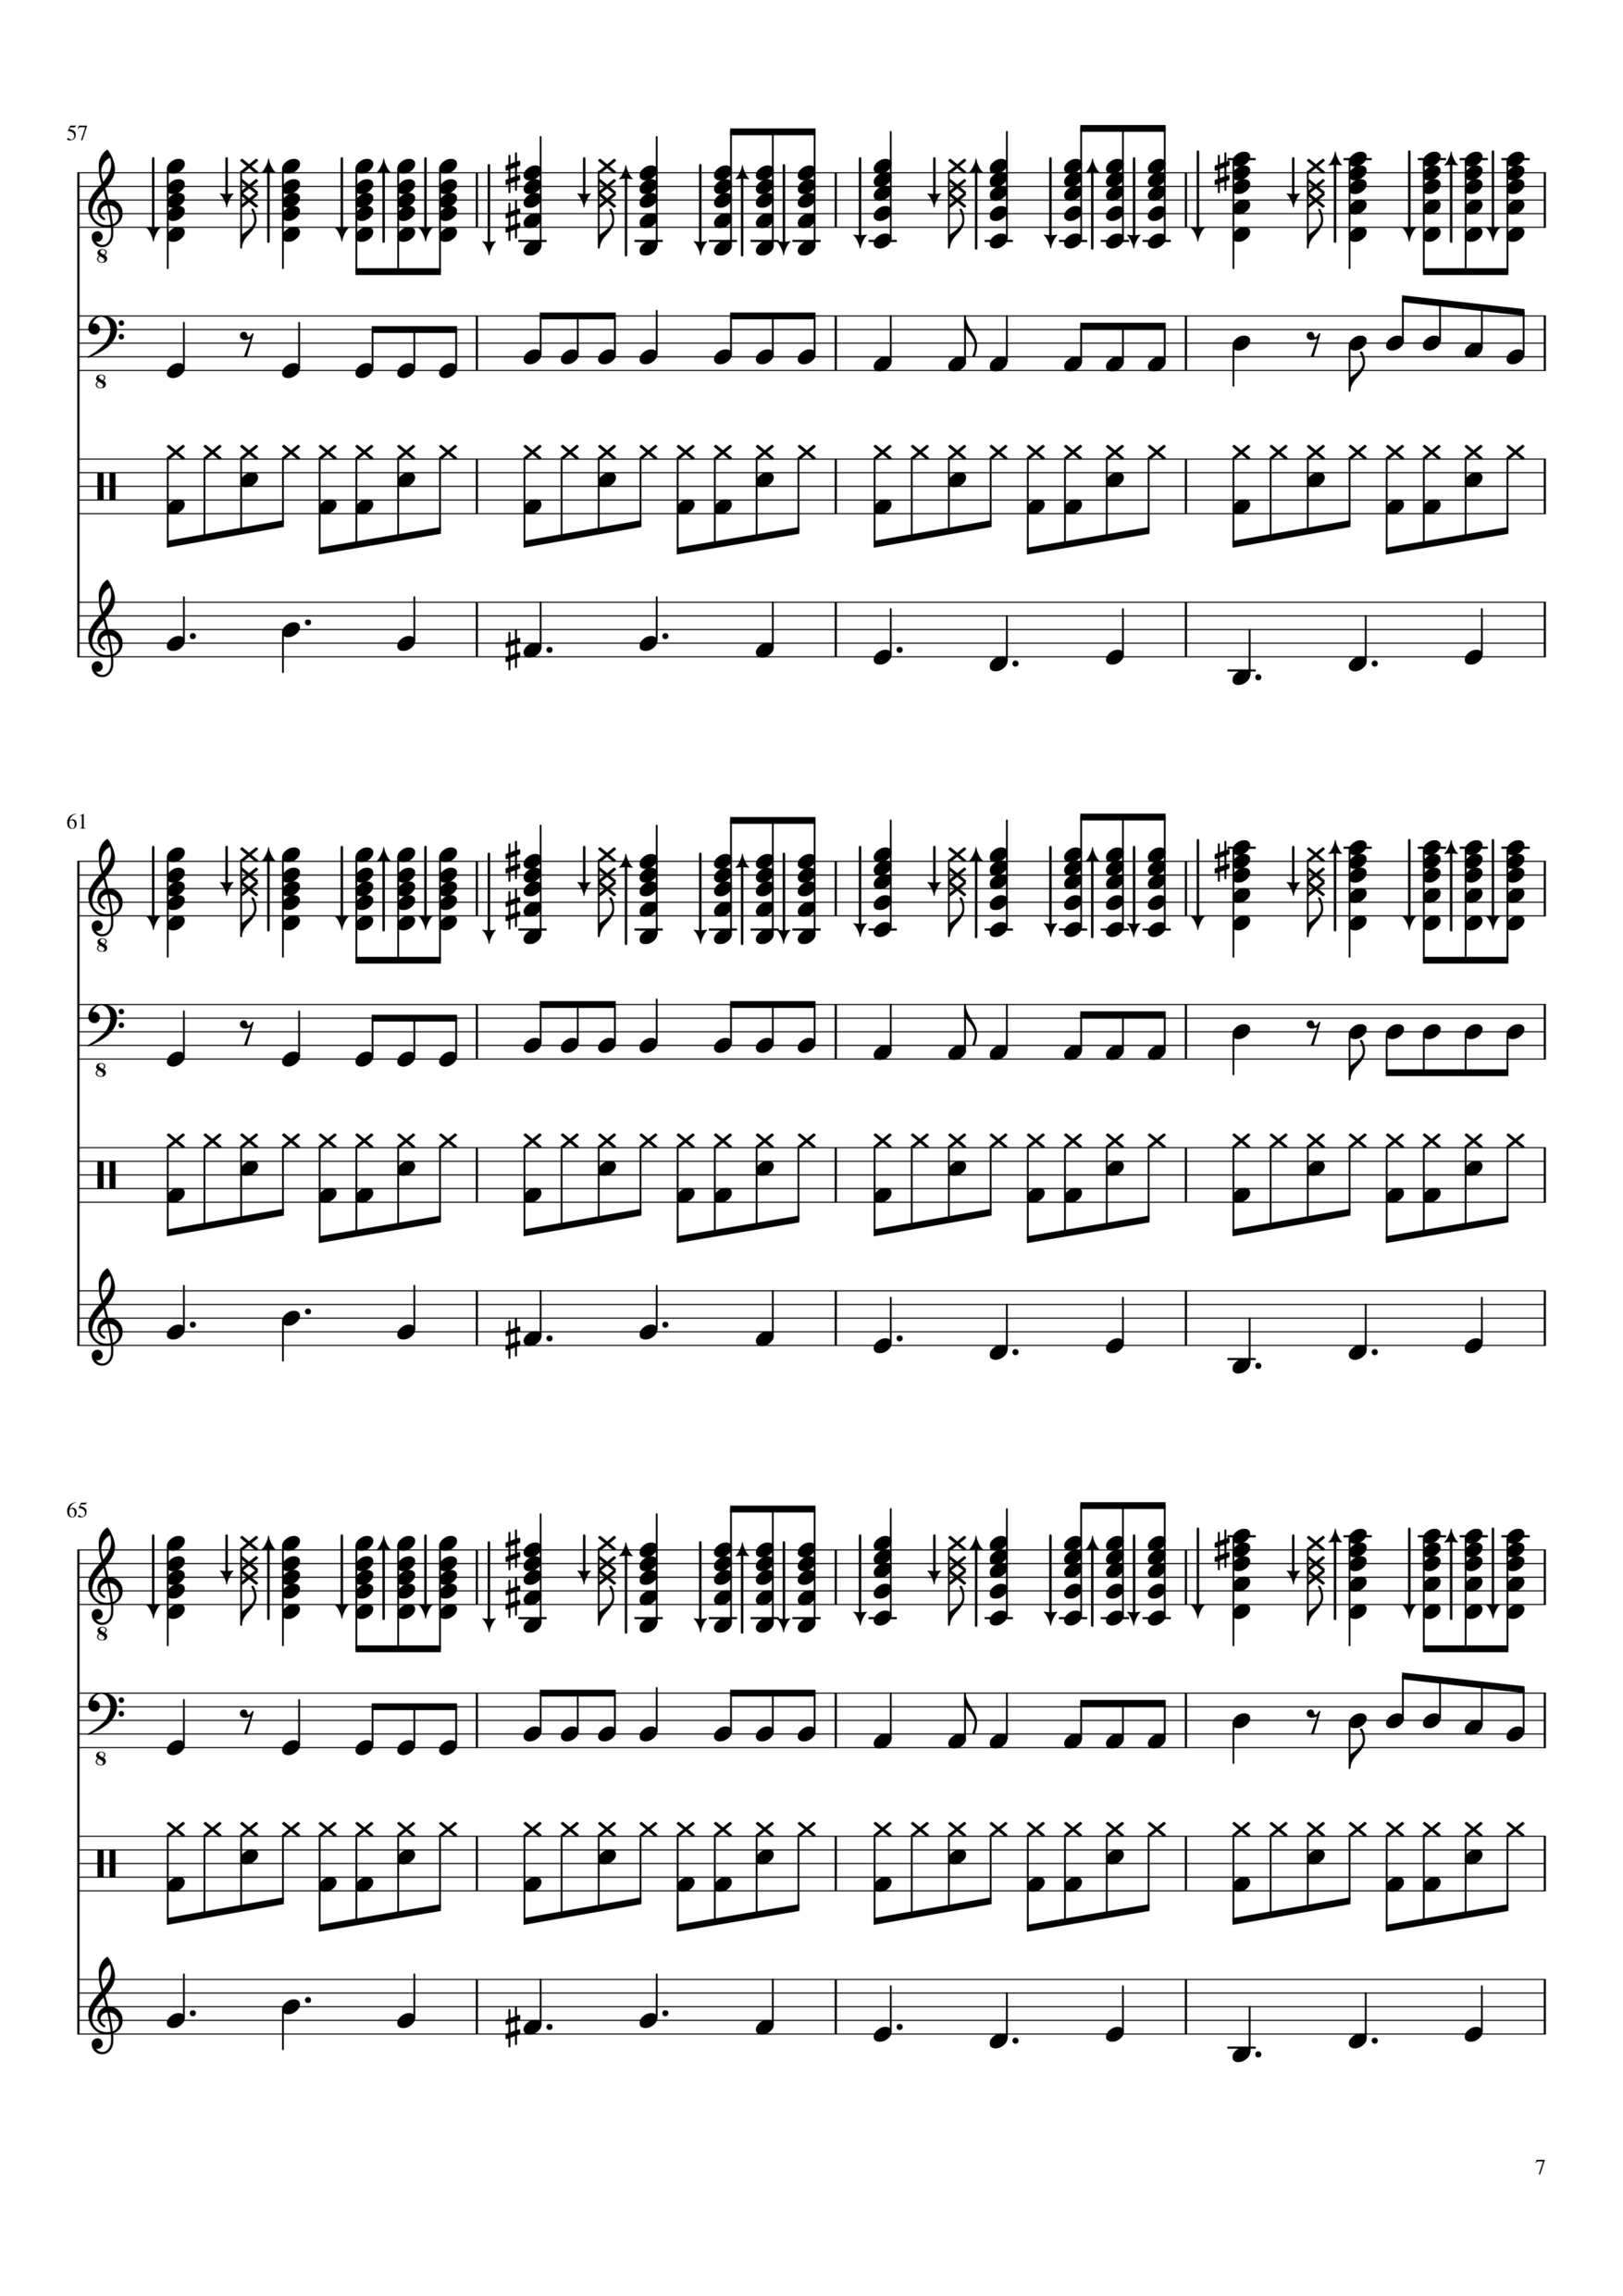 Skvoz dyiru v moey golove slide, Image 7